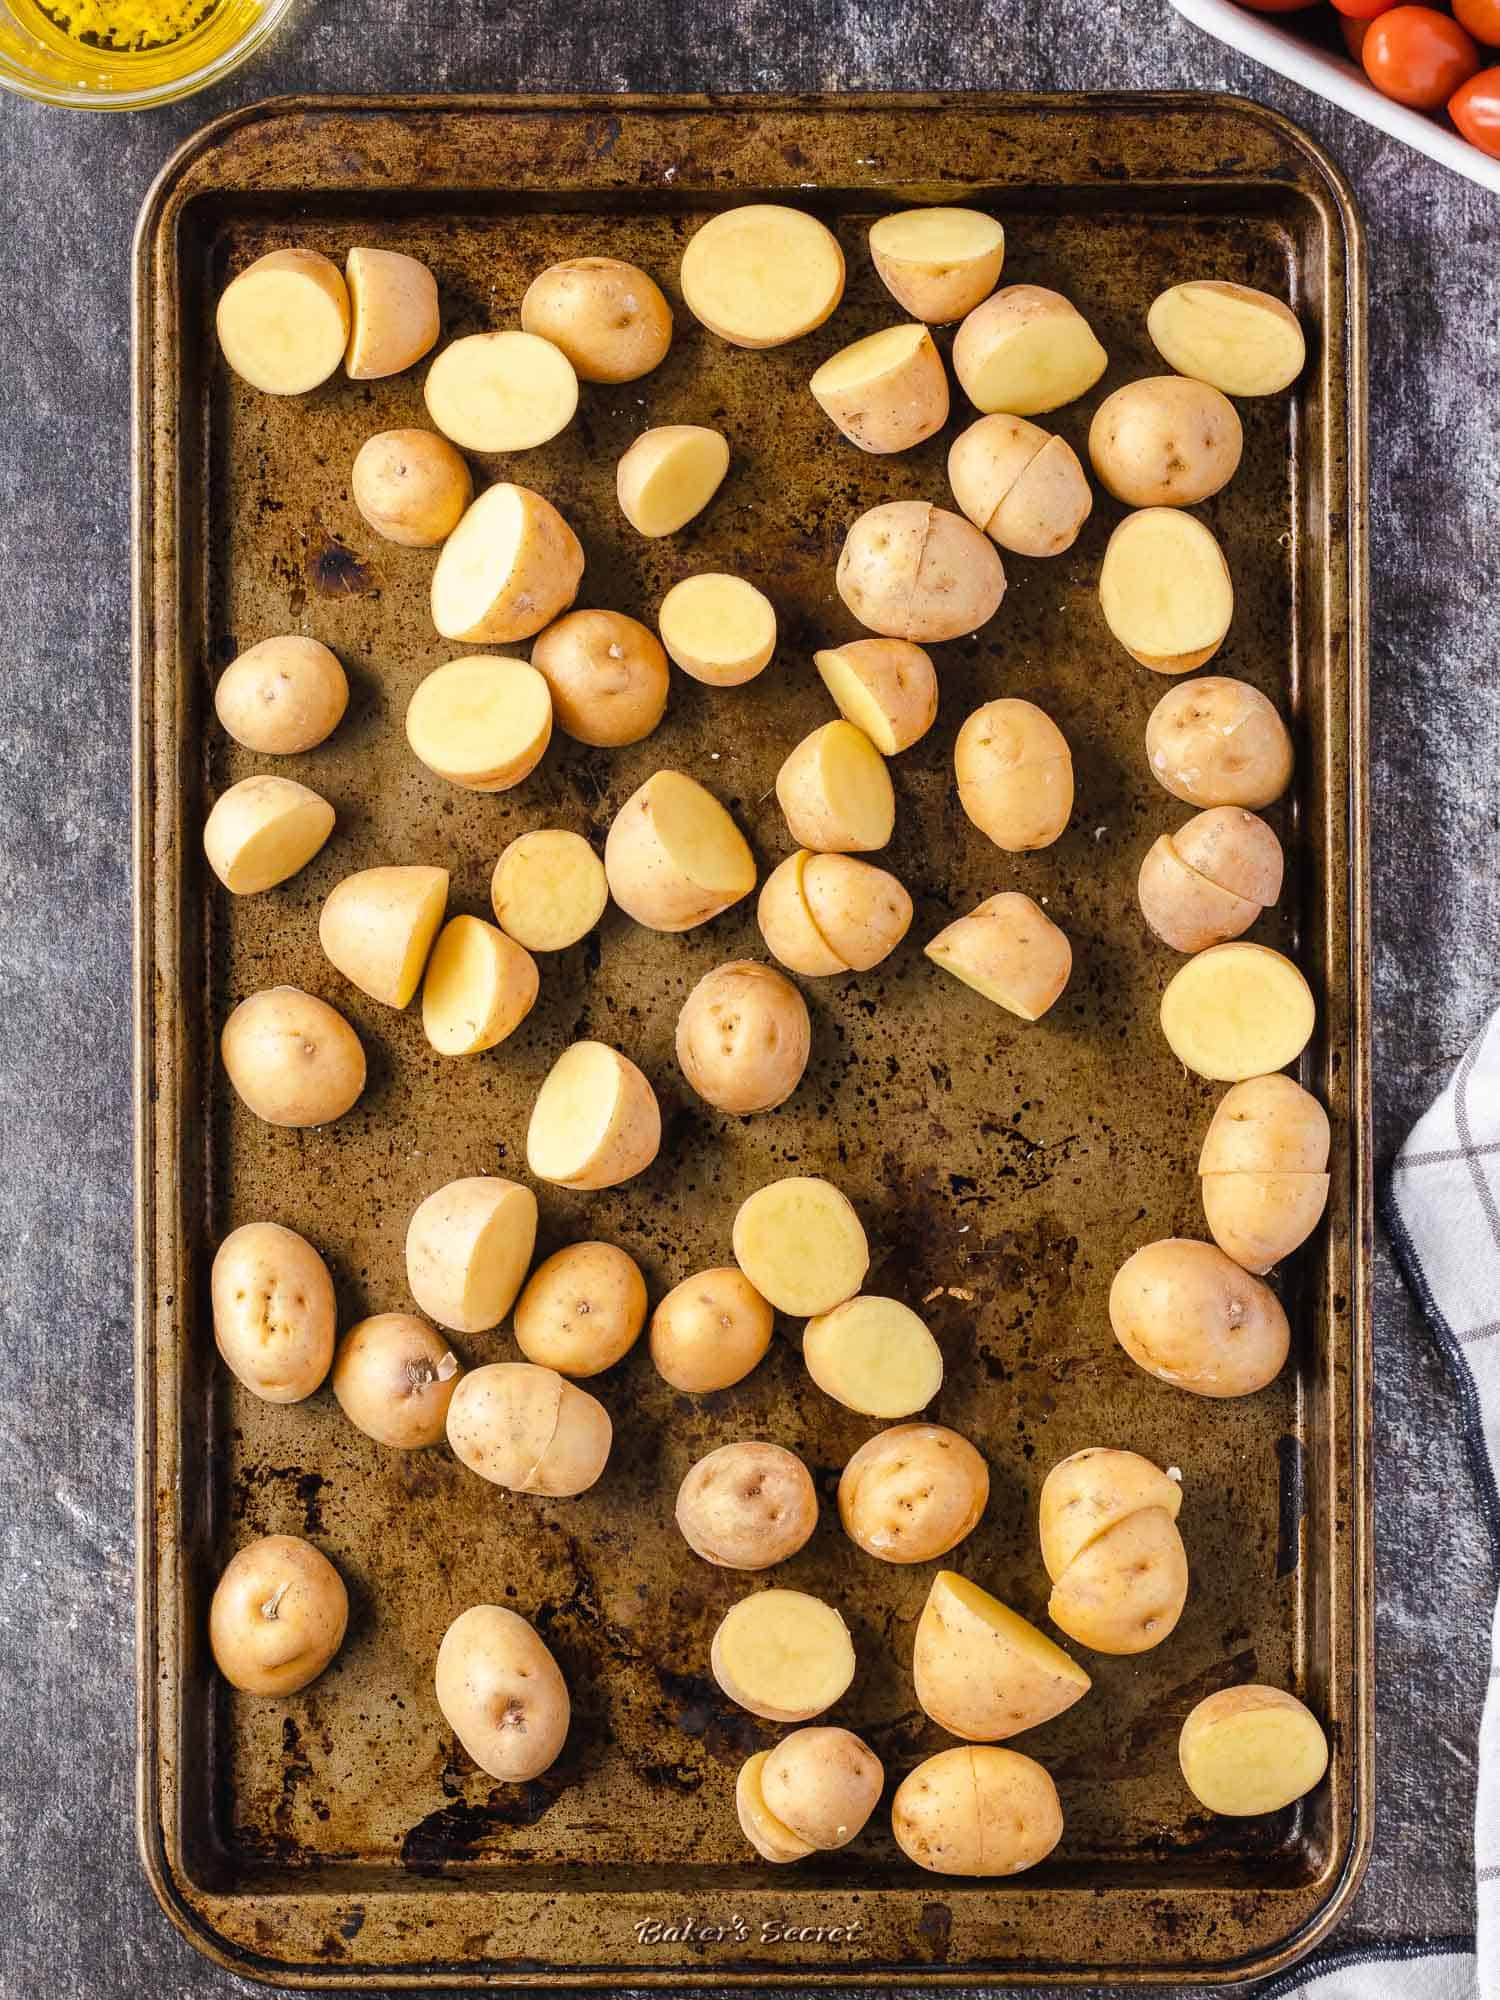 Potatoes on a sheet pan.